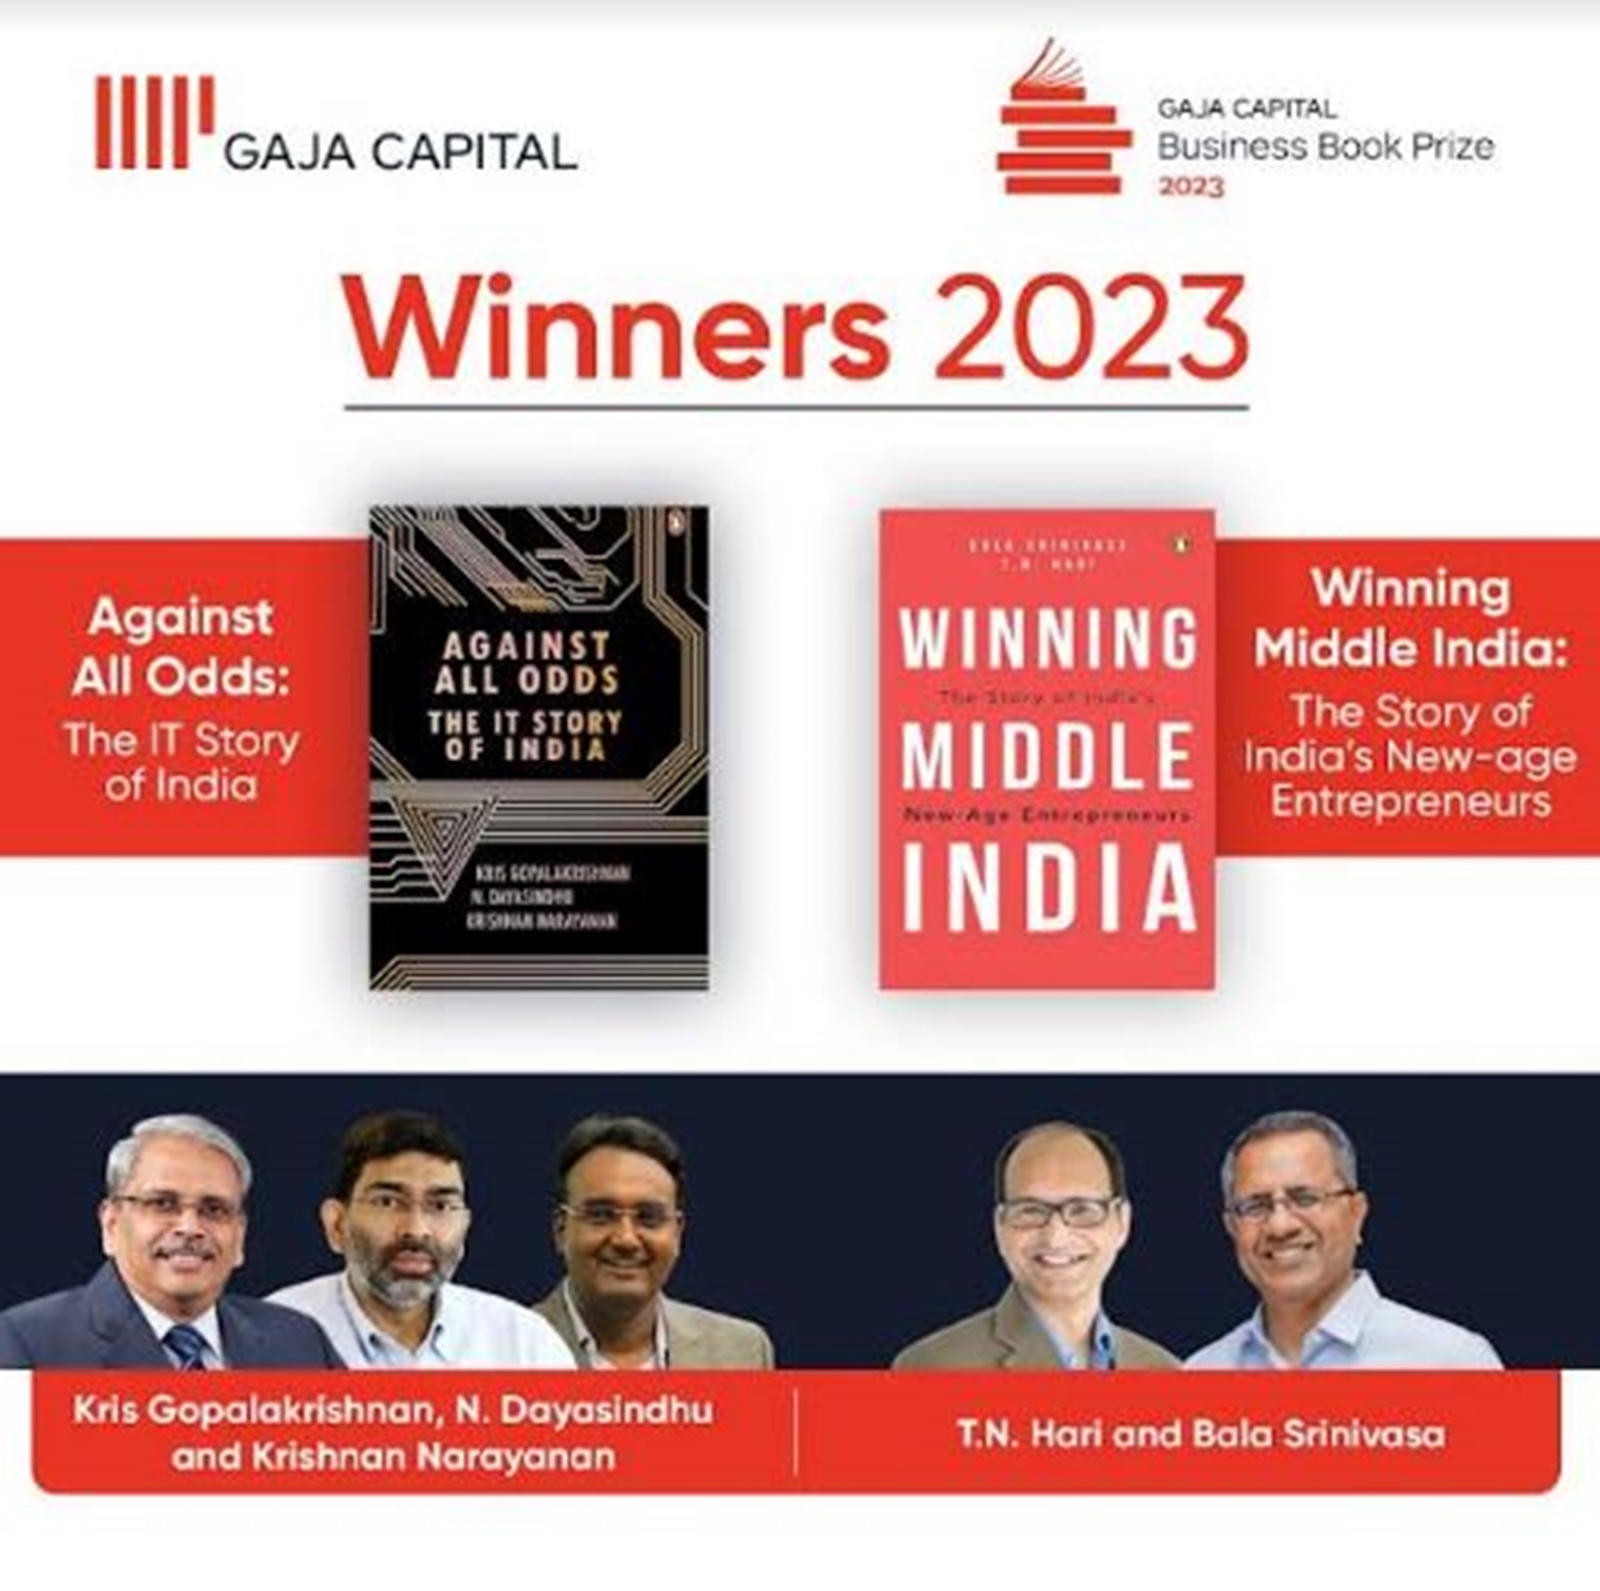 gaja capital business book prize 2023